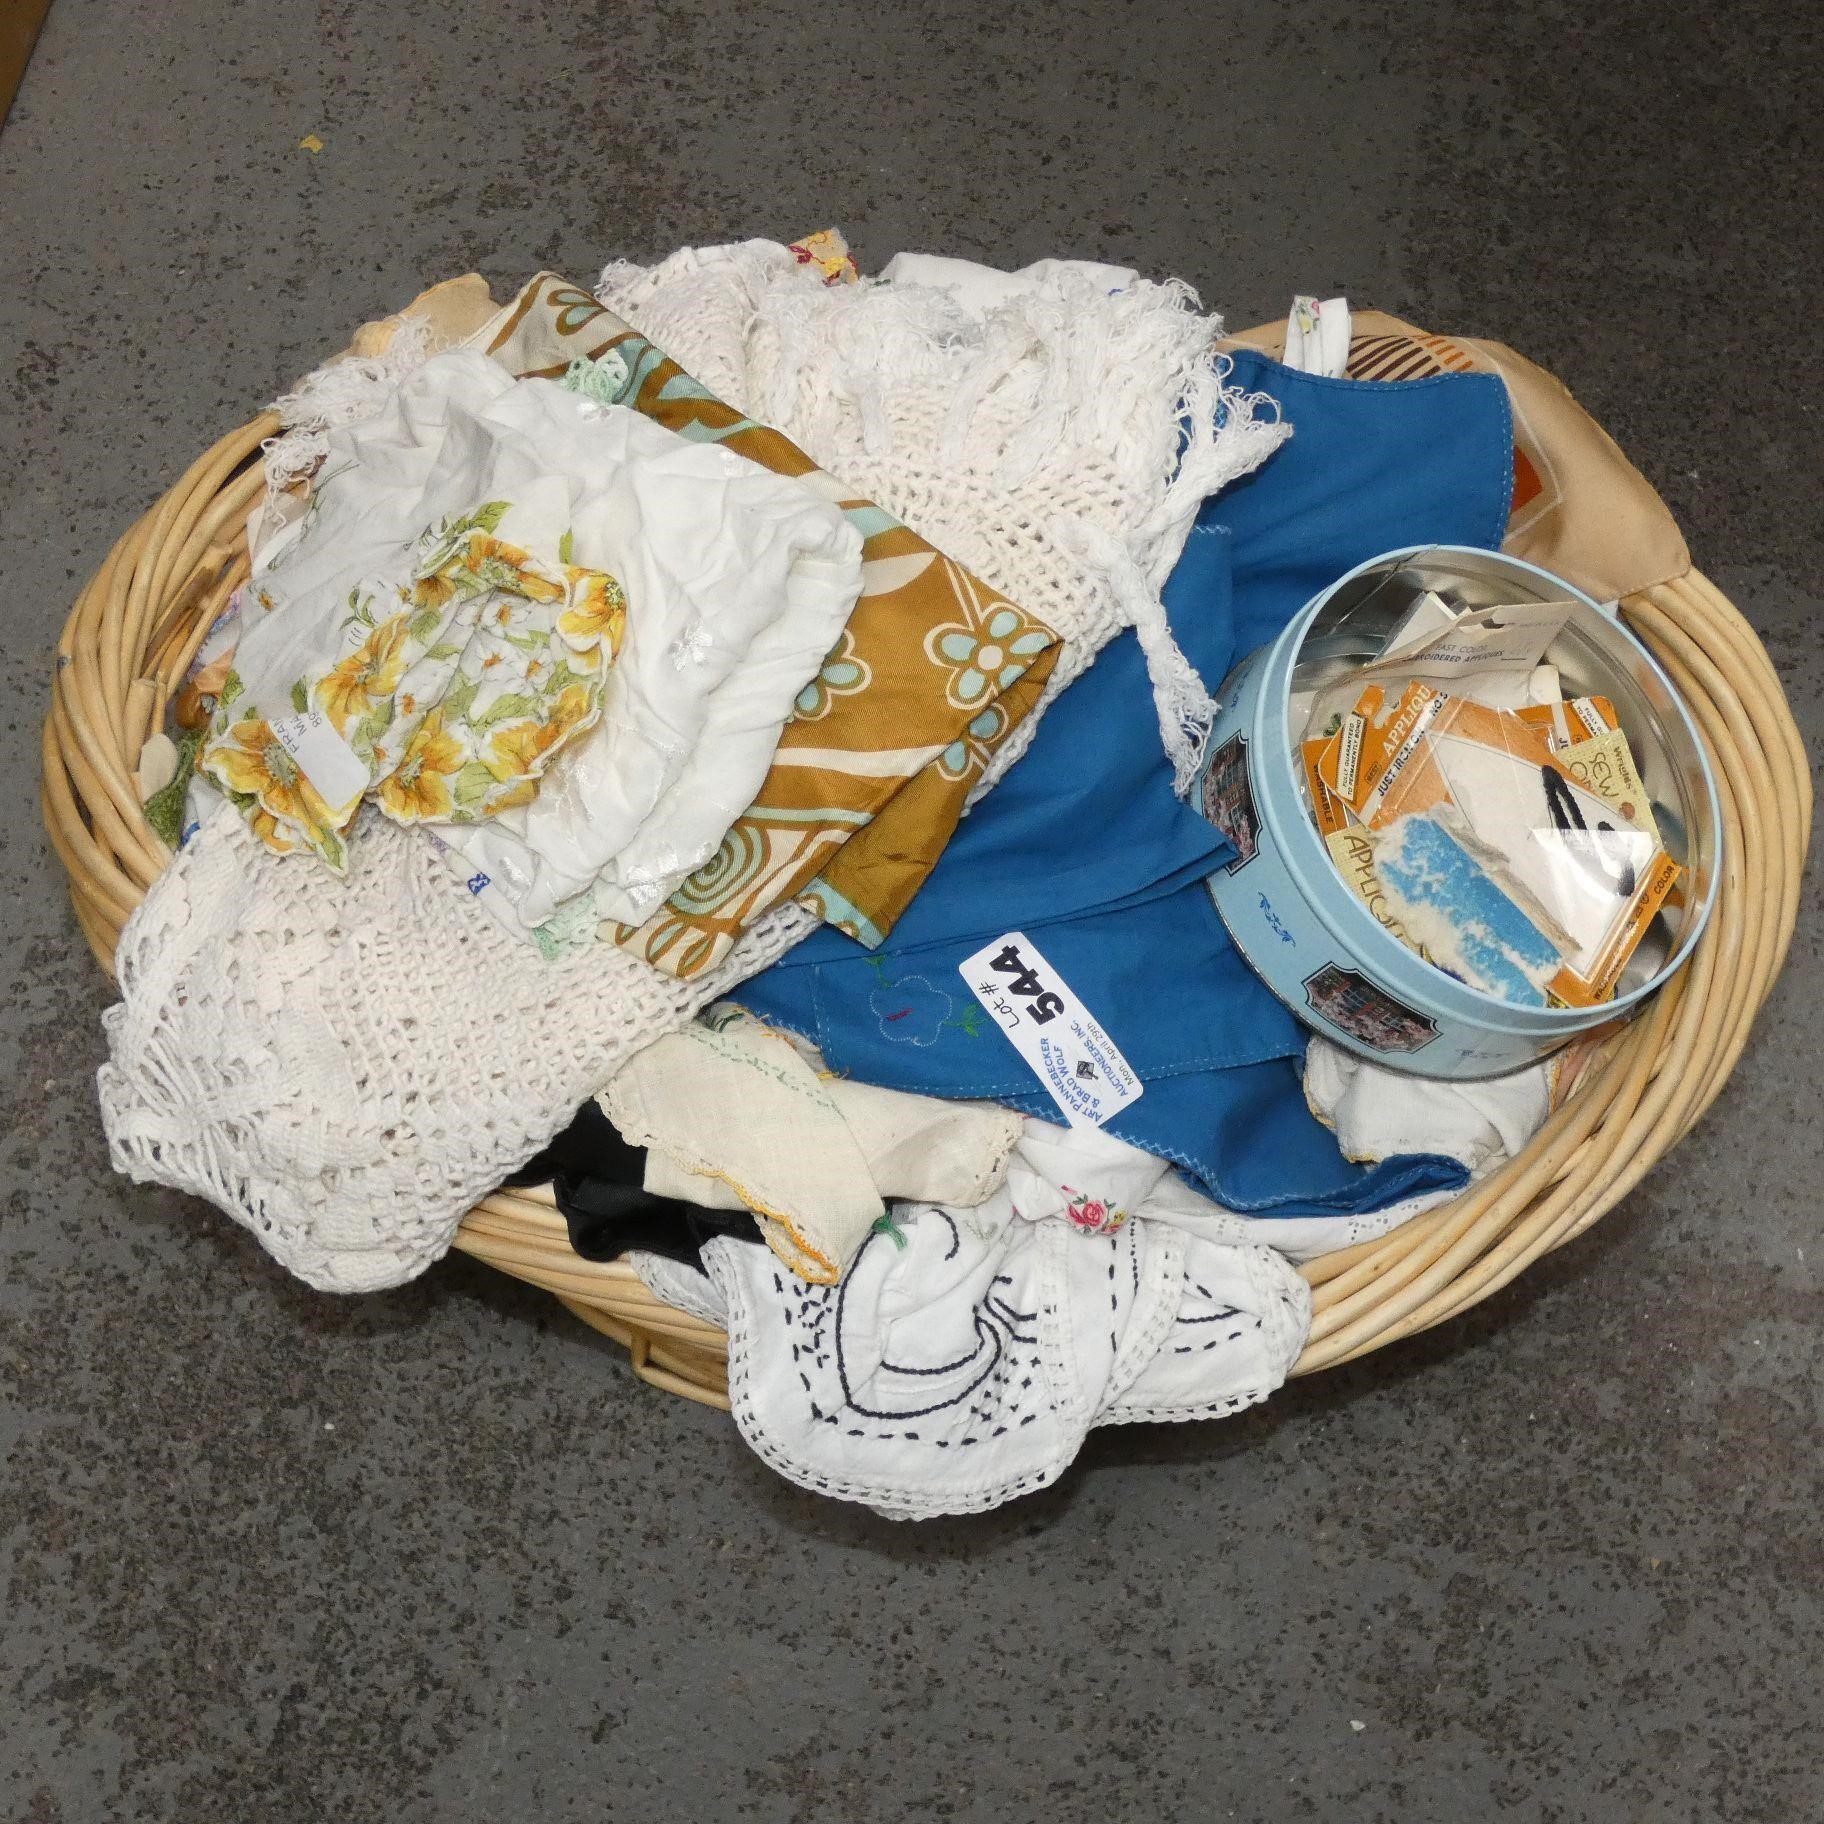 Wash Basket Full of Assorted Linens, Etc